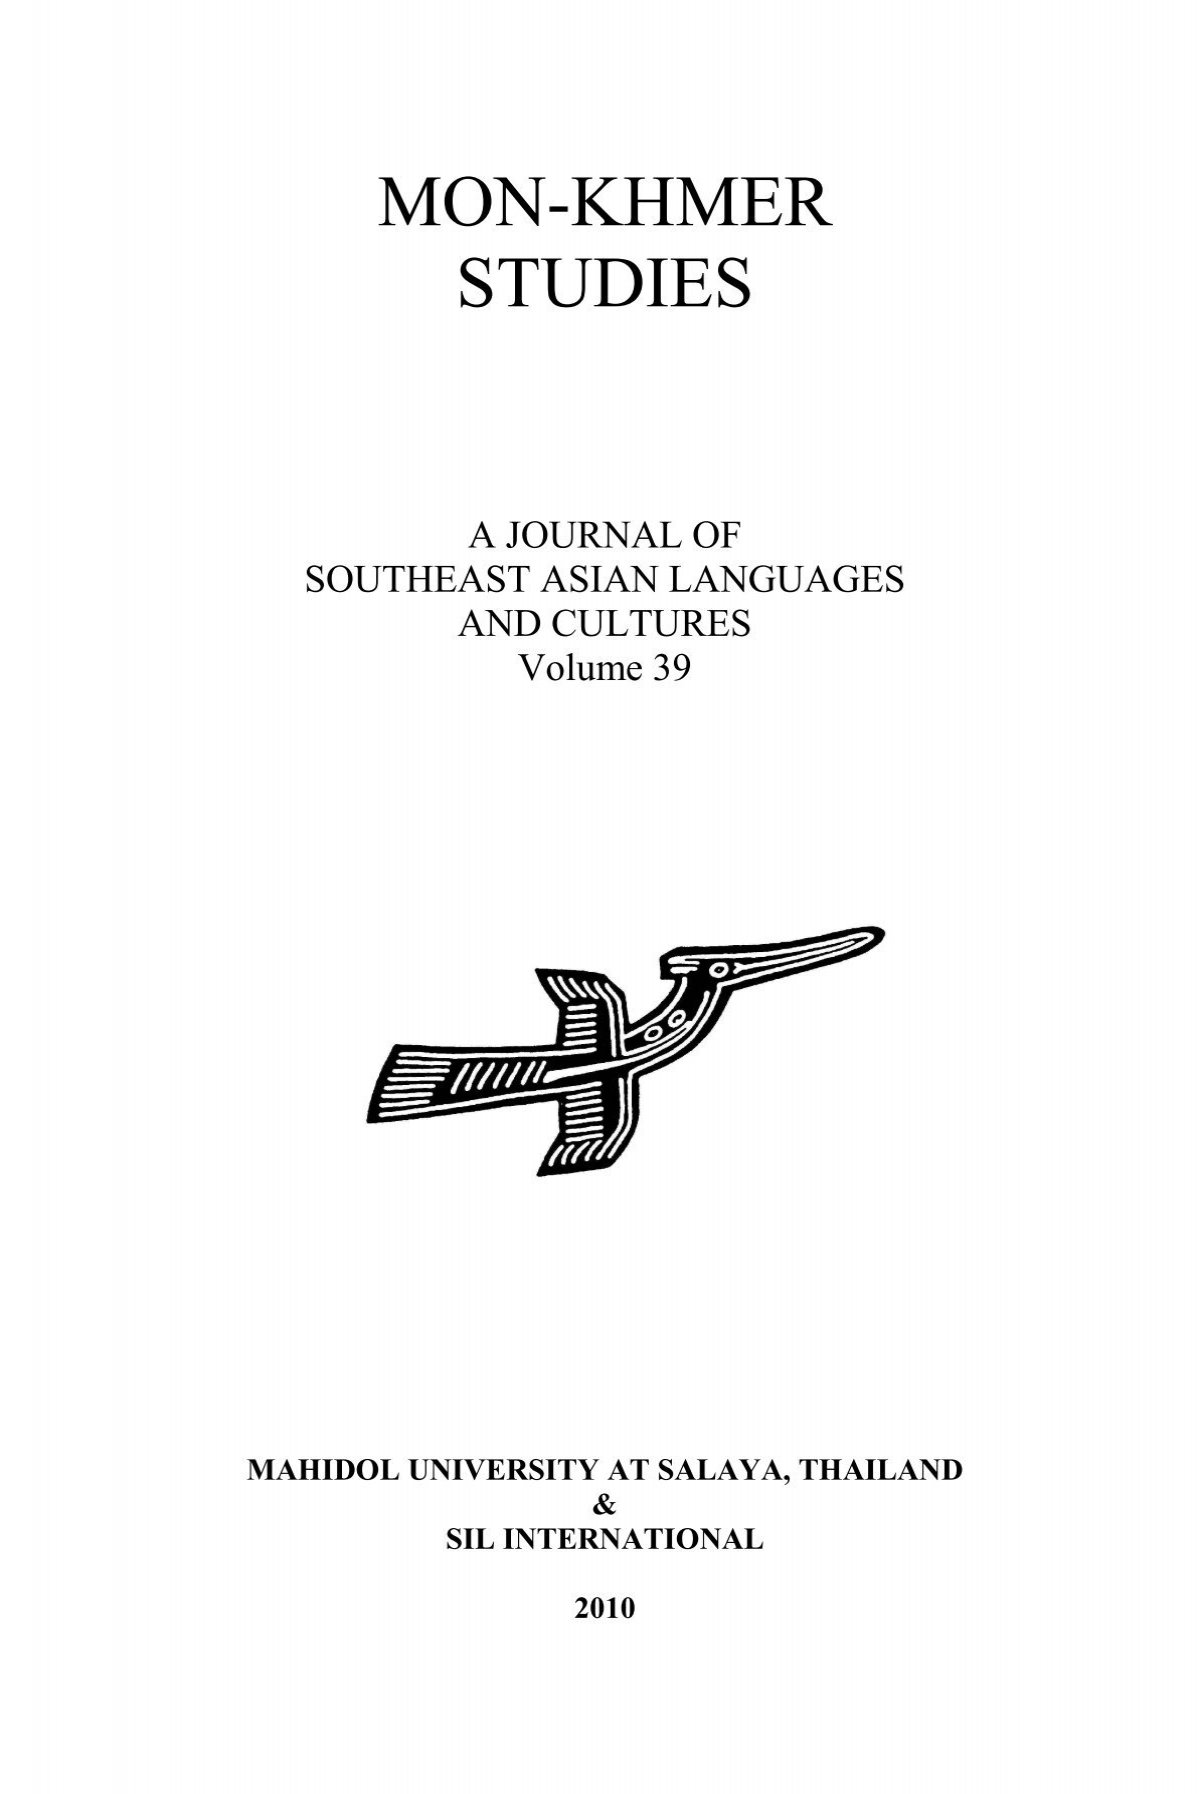 Vol. 39 - Studies Journal